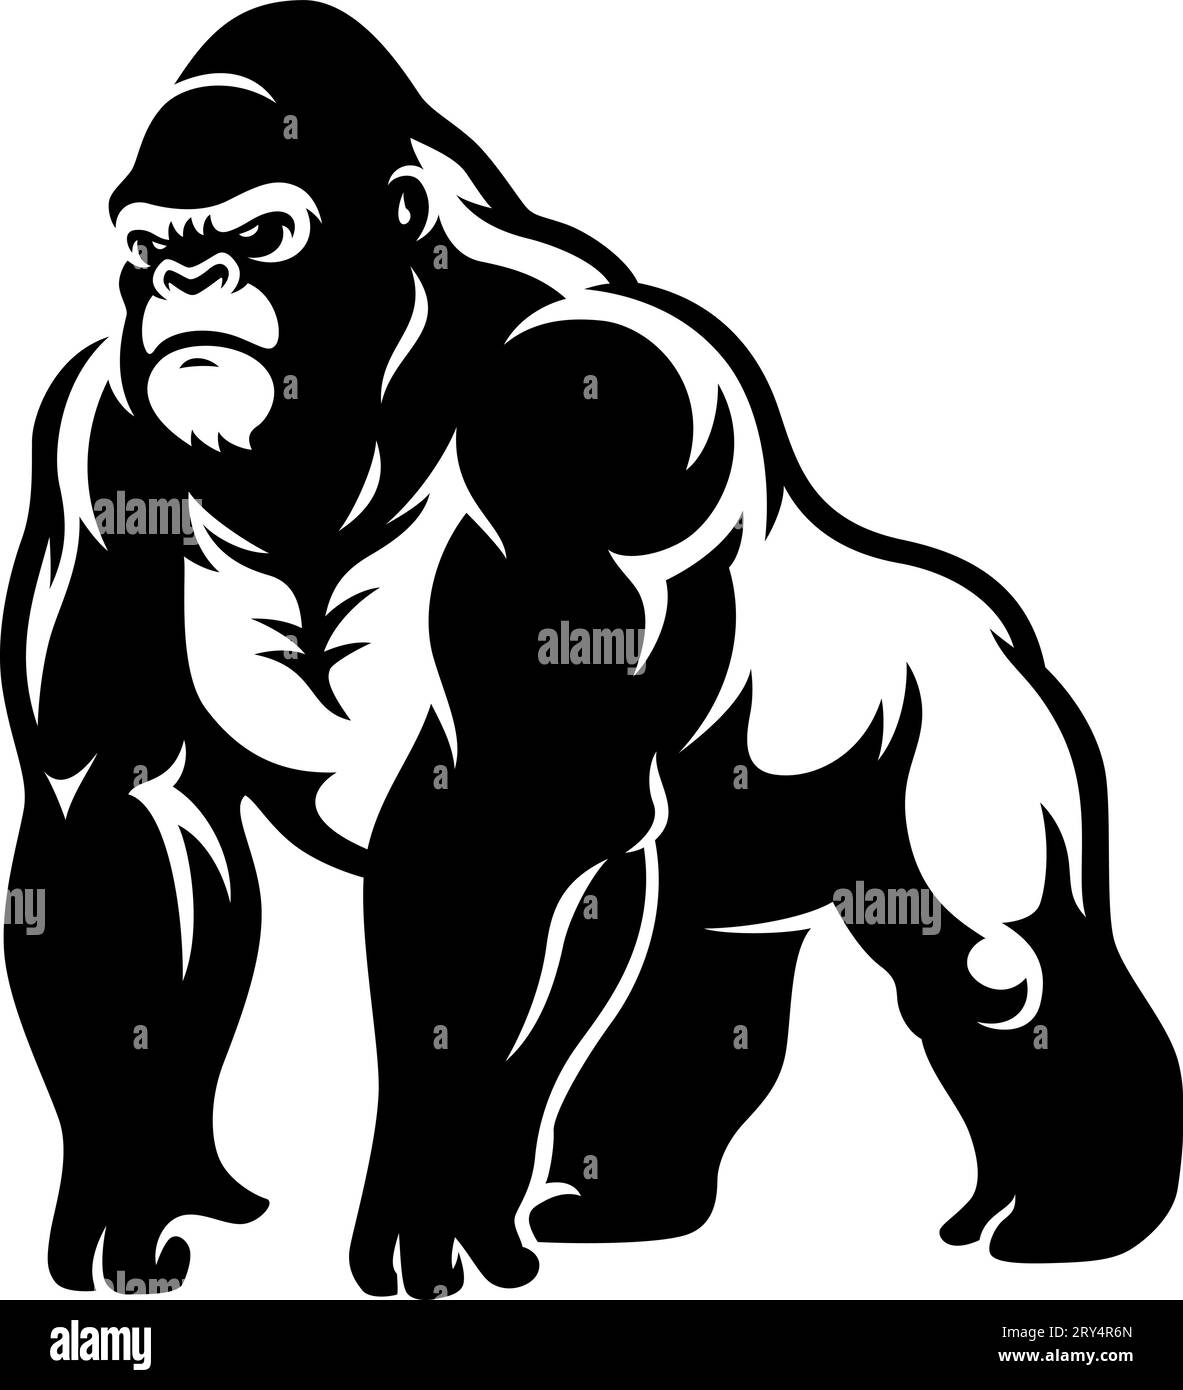 Aggressive Muscular Gorilla Standing Illustration Stock Vector Image ...